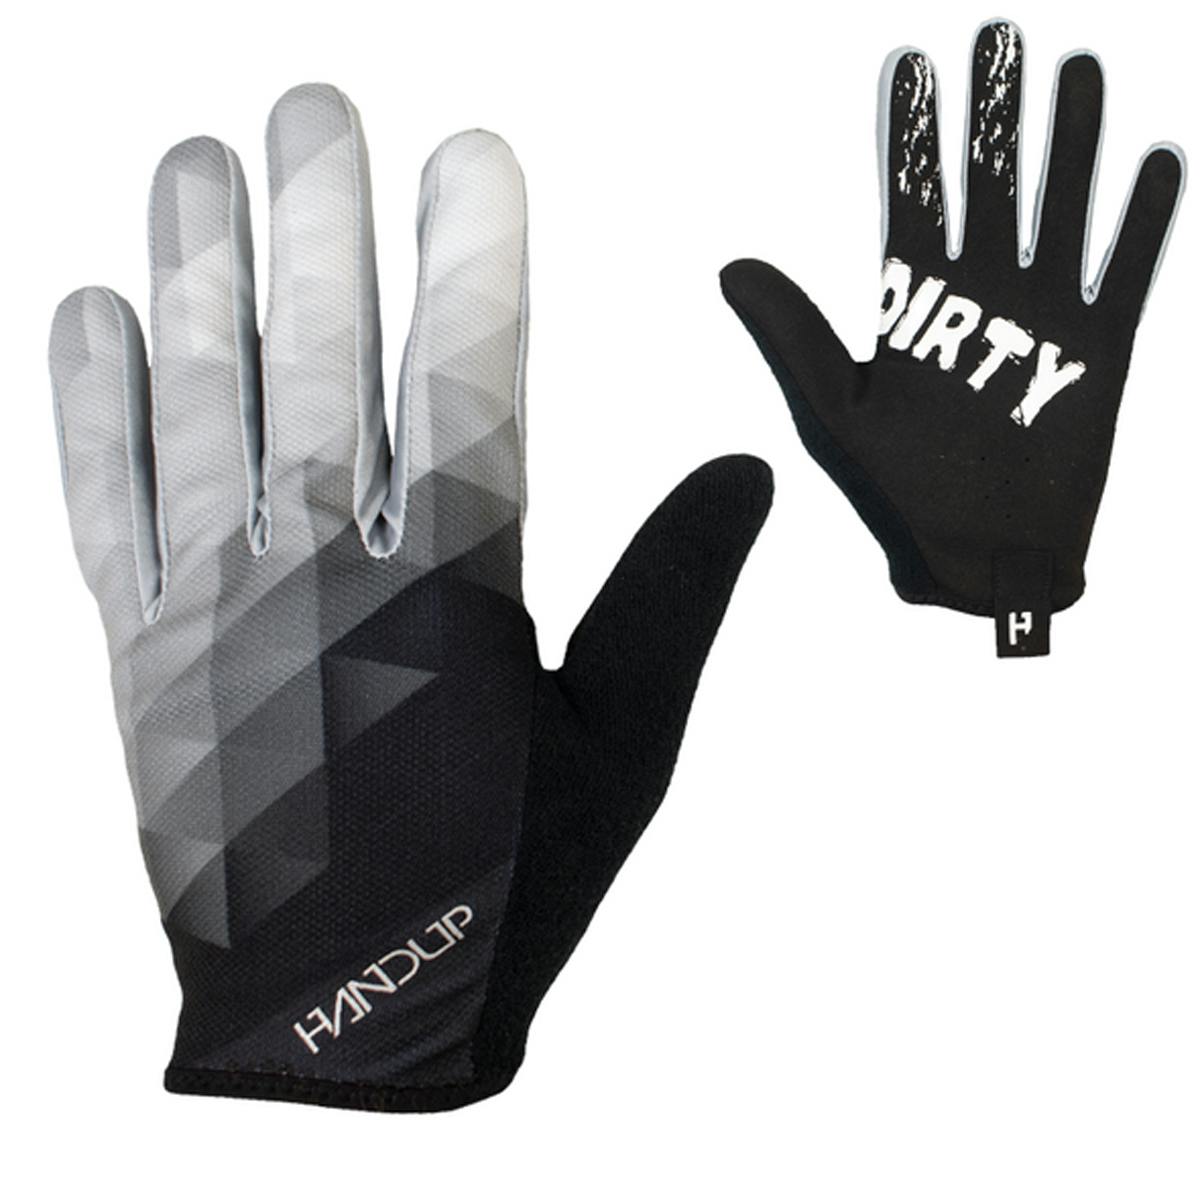 Hand Up Gloves Prizm Bike Gloves - Black / White - XL